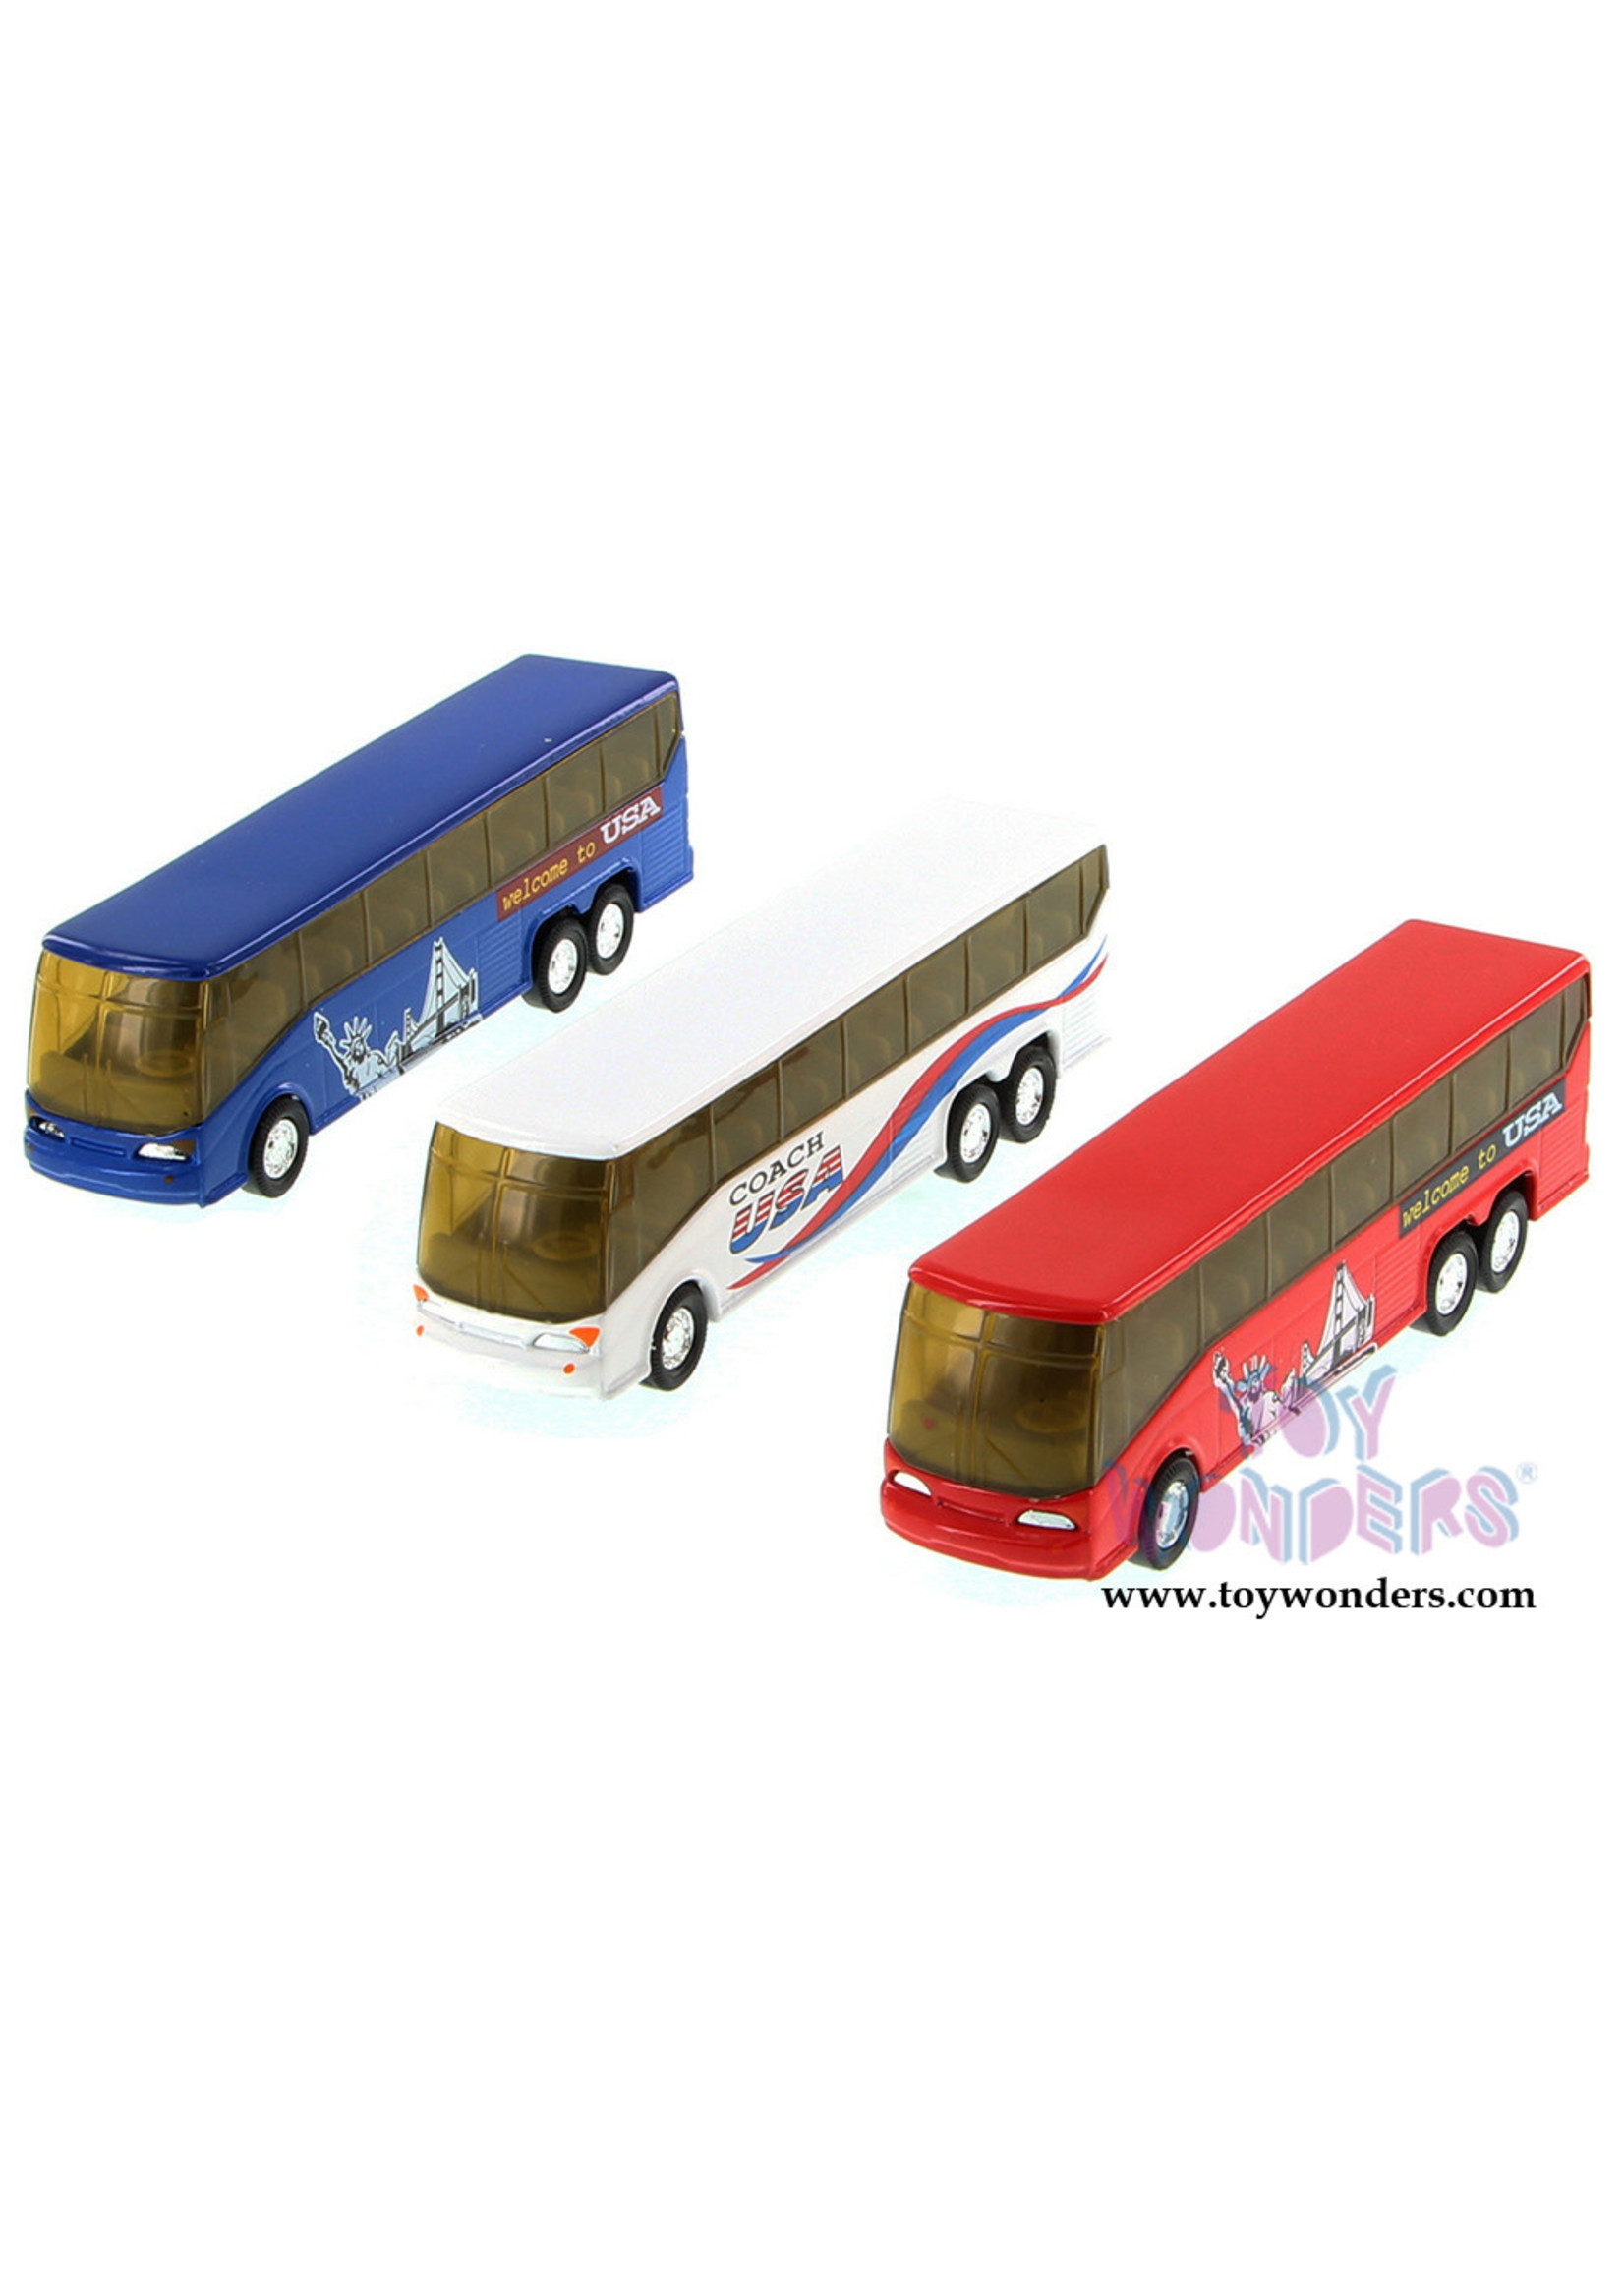 Coach Bus 7"  Red White Blue Yellow "COACH"